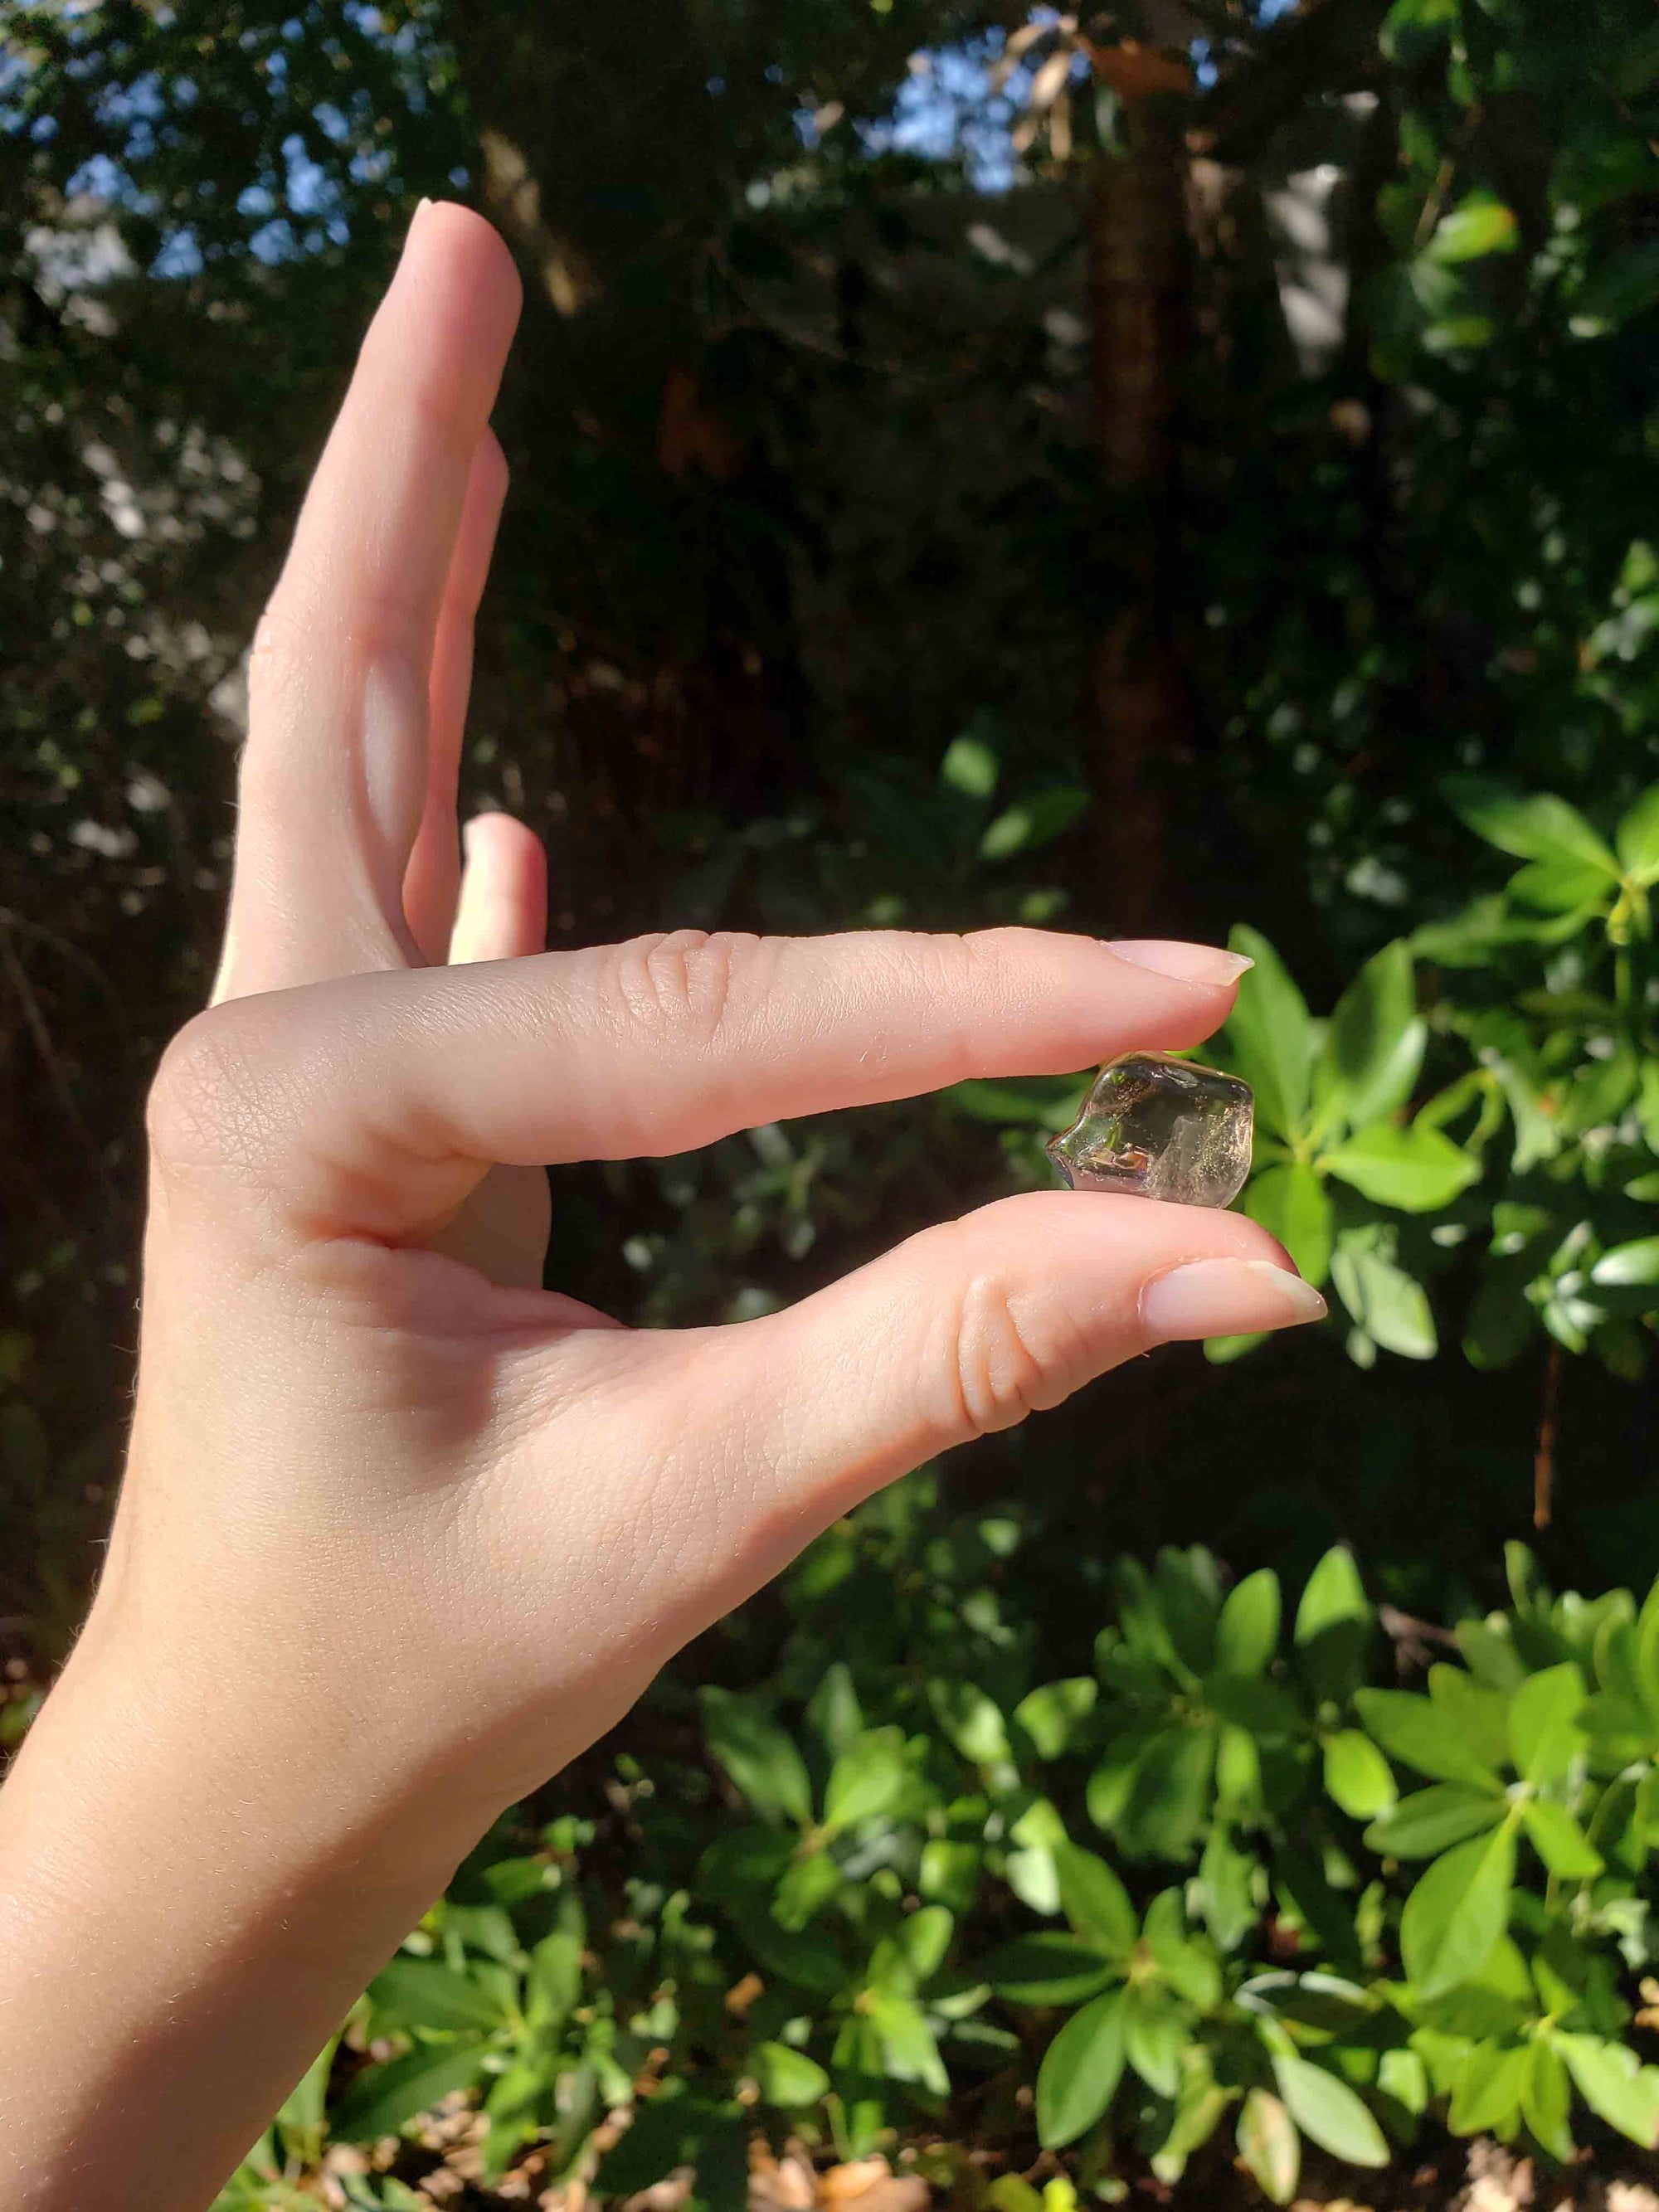 Pale Smoky Quartz Tumbled Gemstone - Mini One Stone in Hand Outdoors